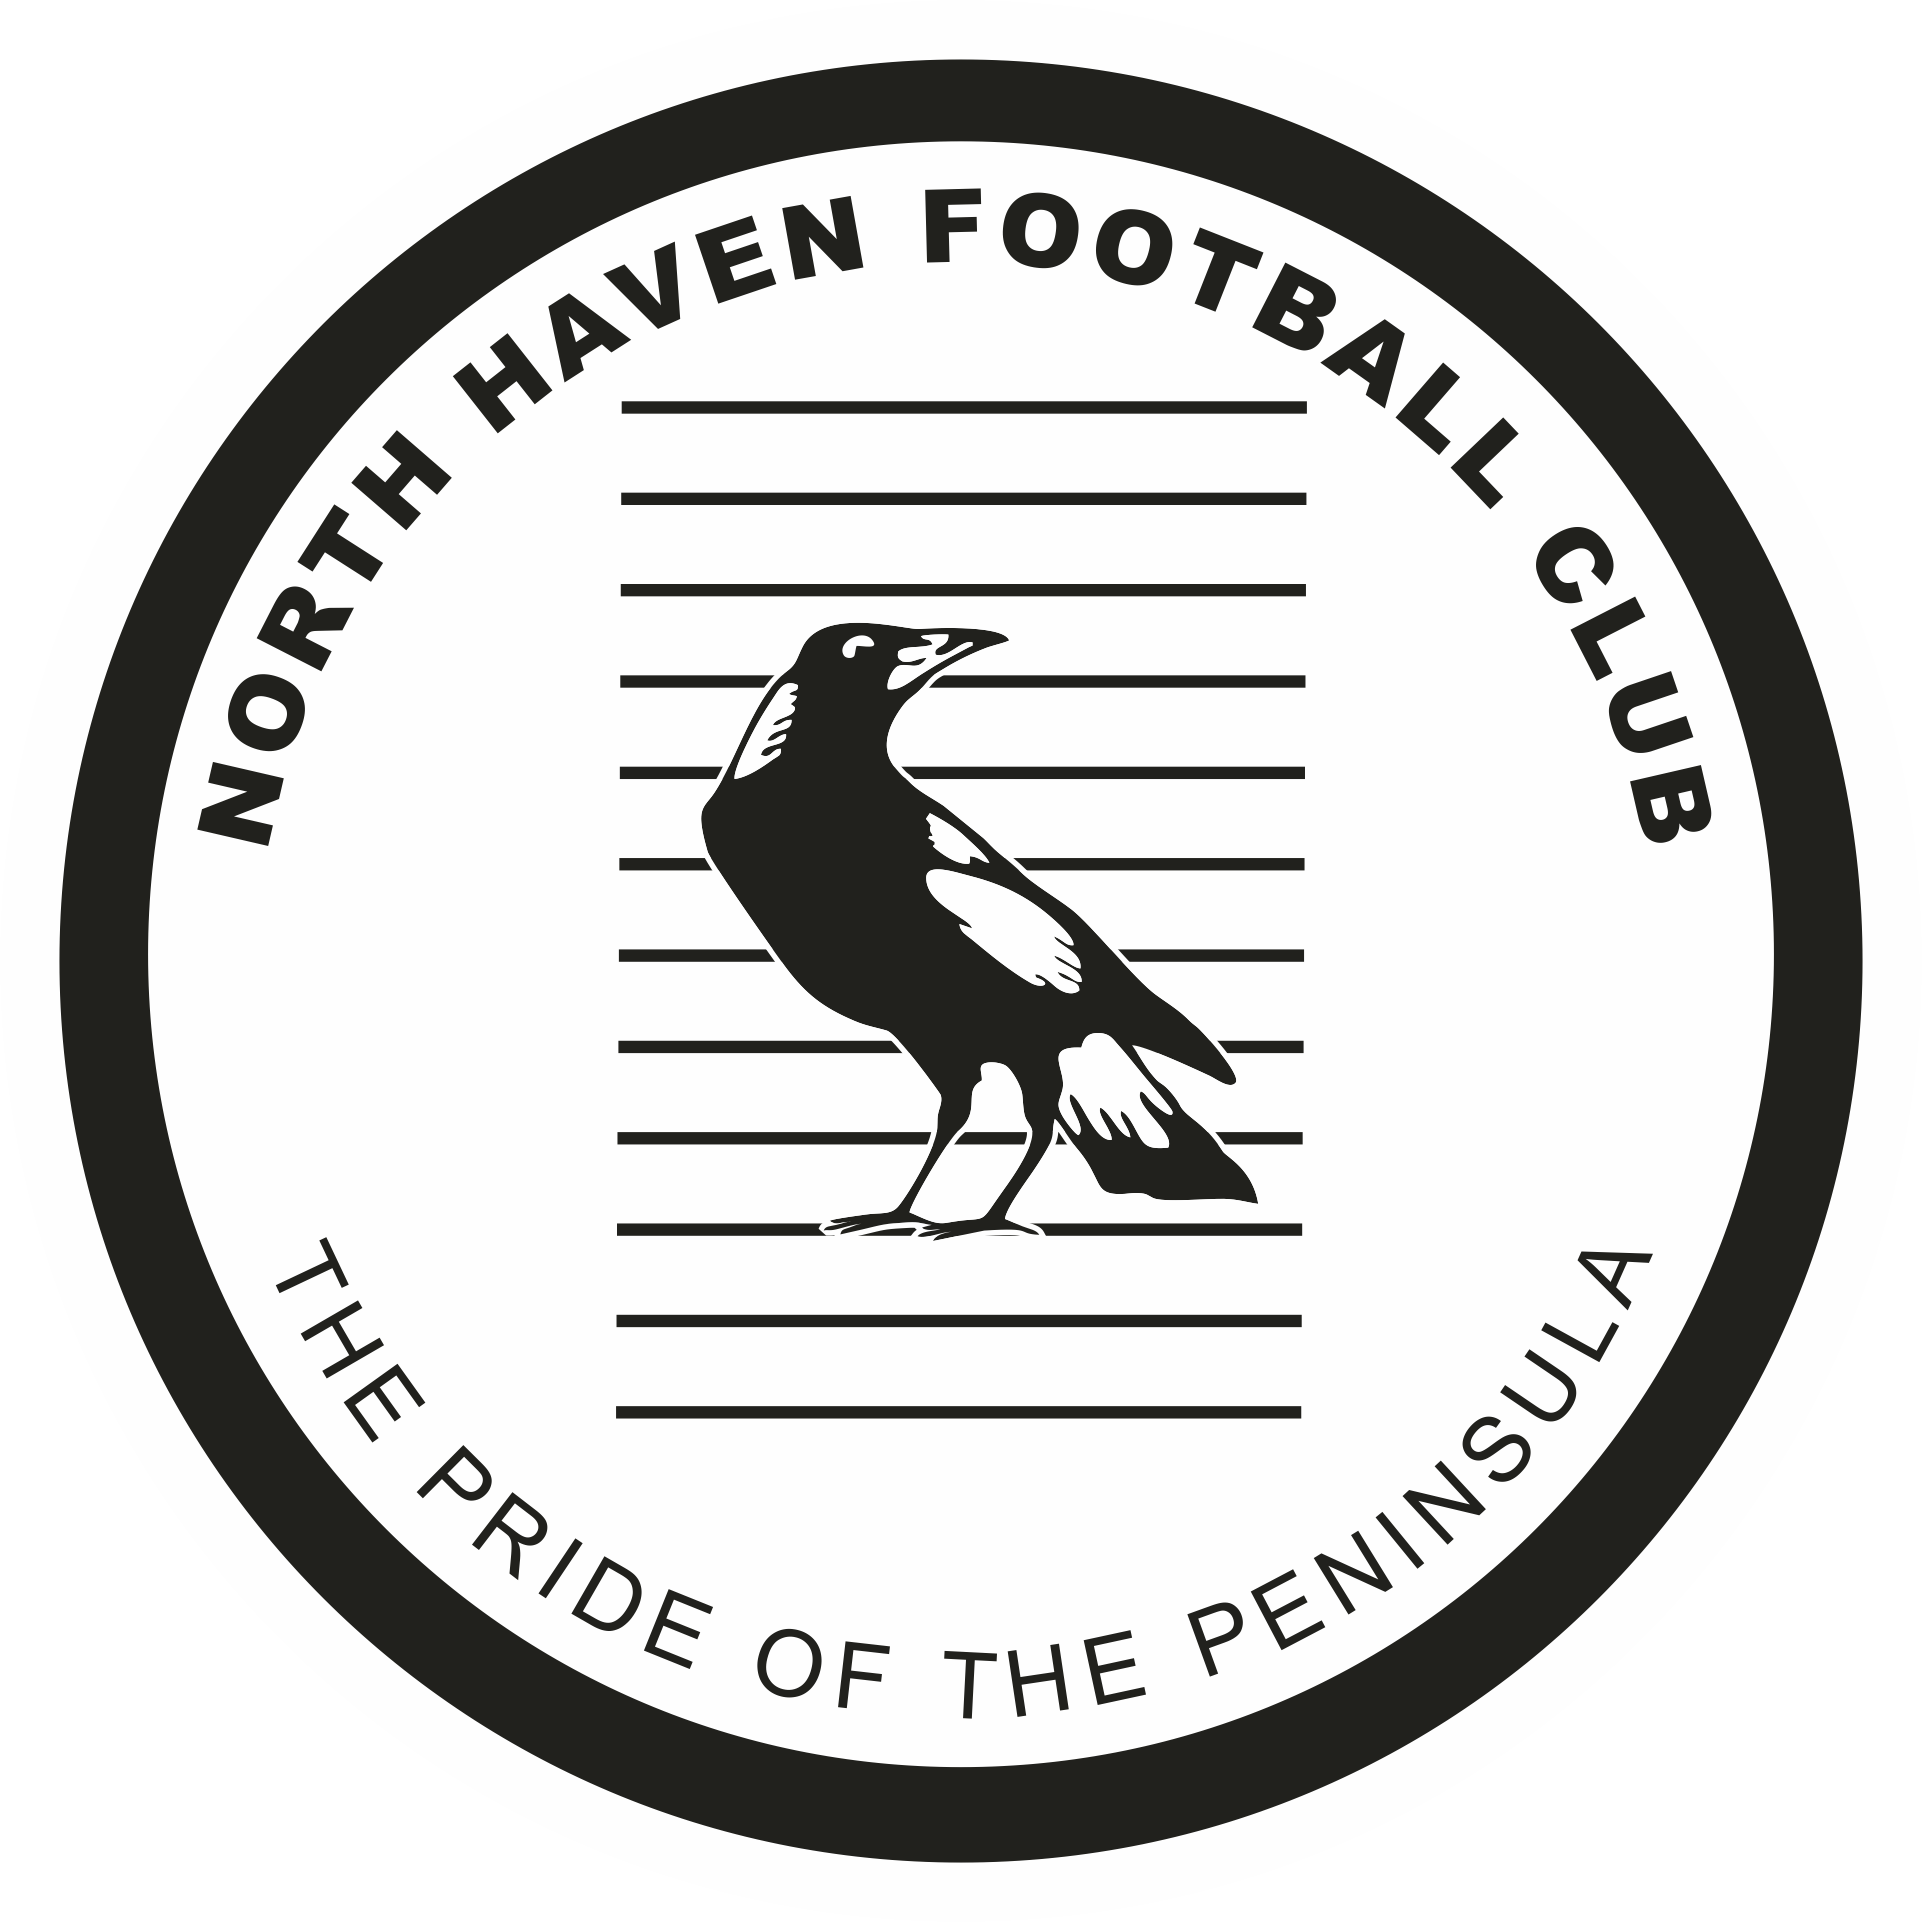 North Haven Football Club